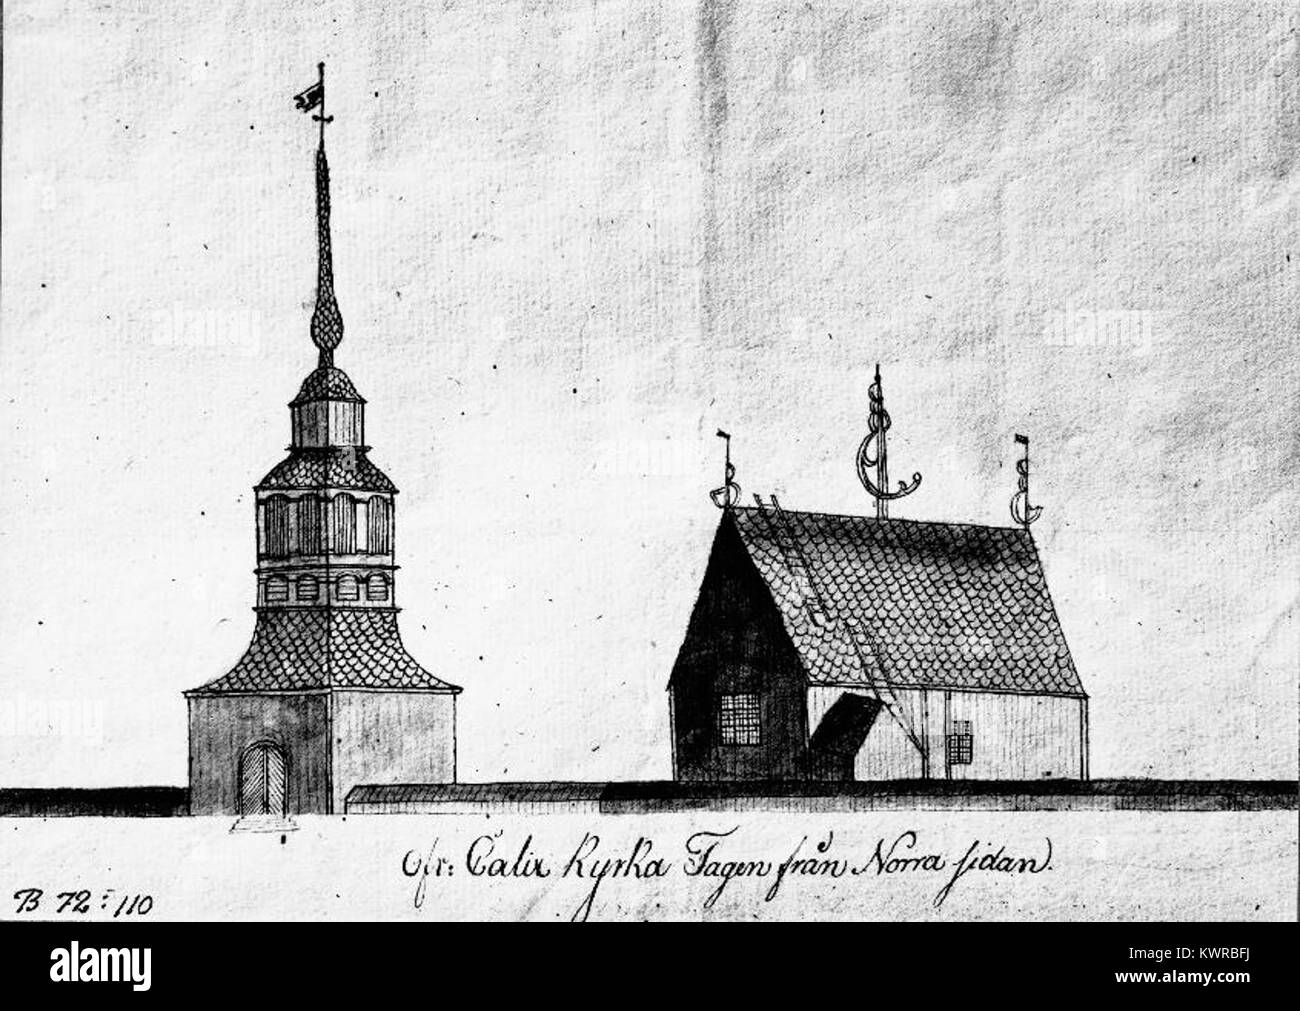 Överkalix gamla kyrka - KMB - 16000200156865 Stock Photo